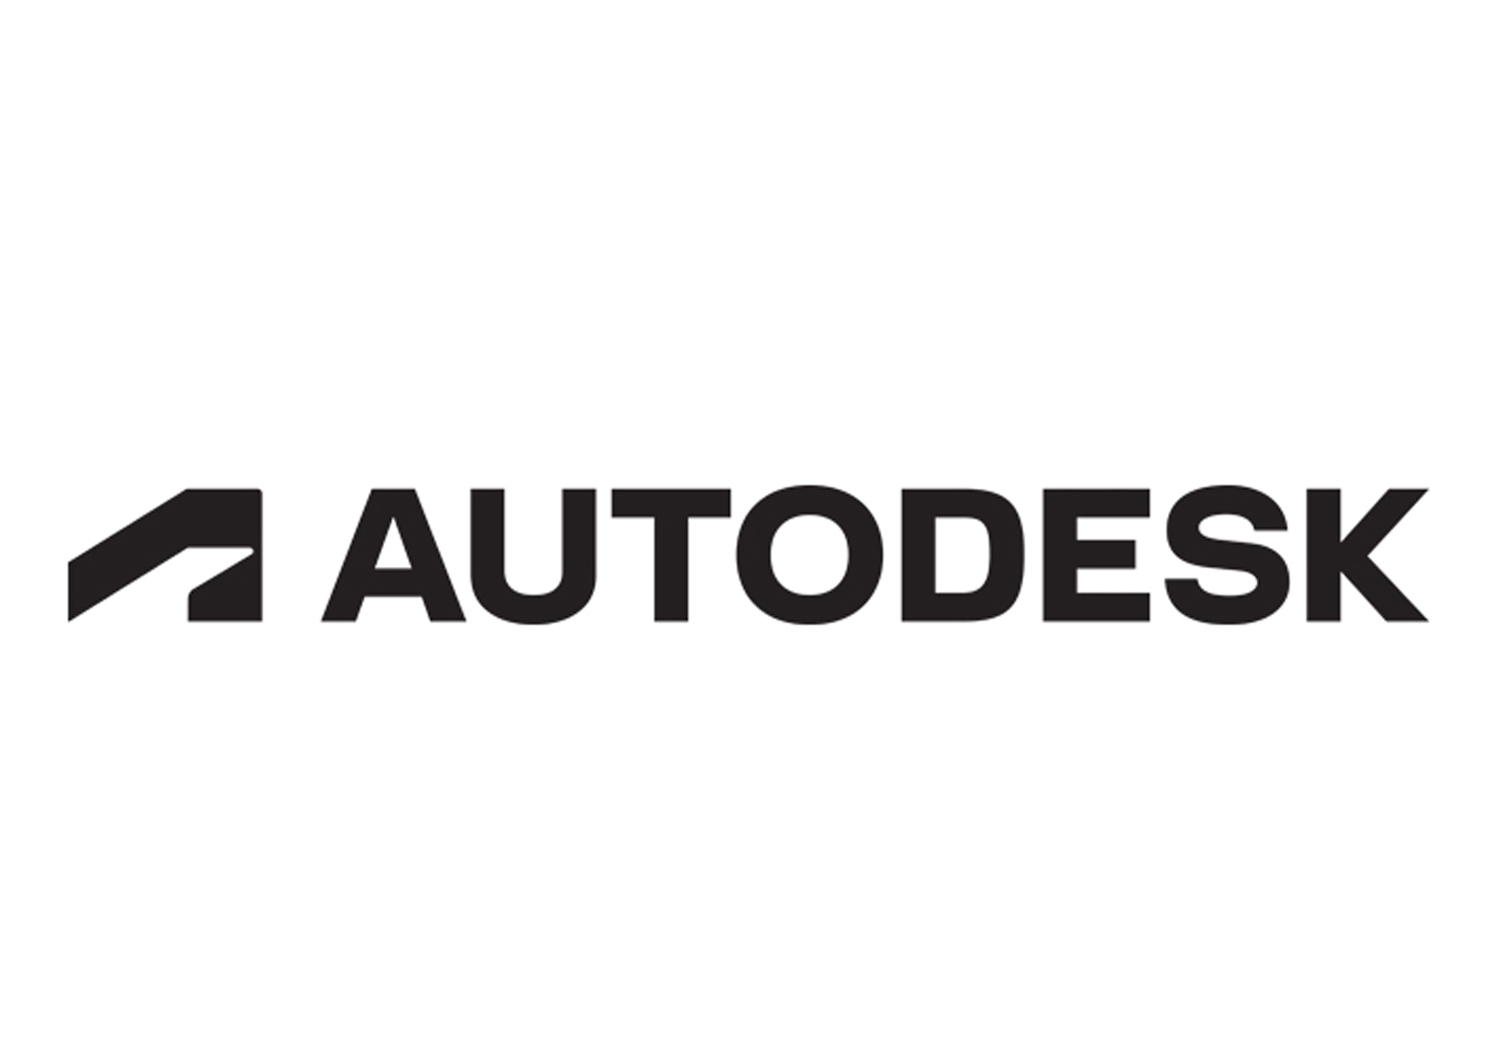 autodesk logo vspace